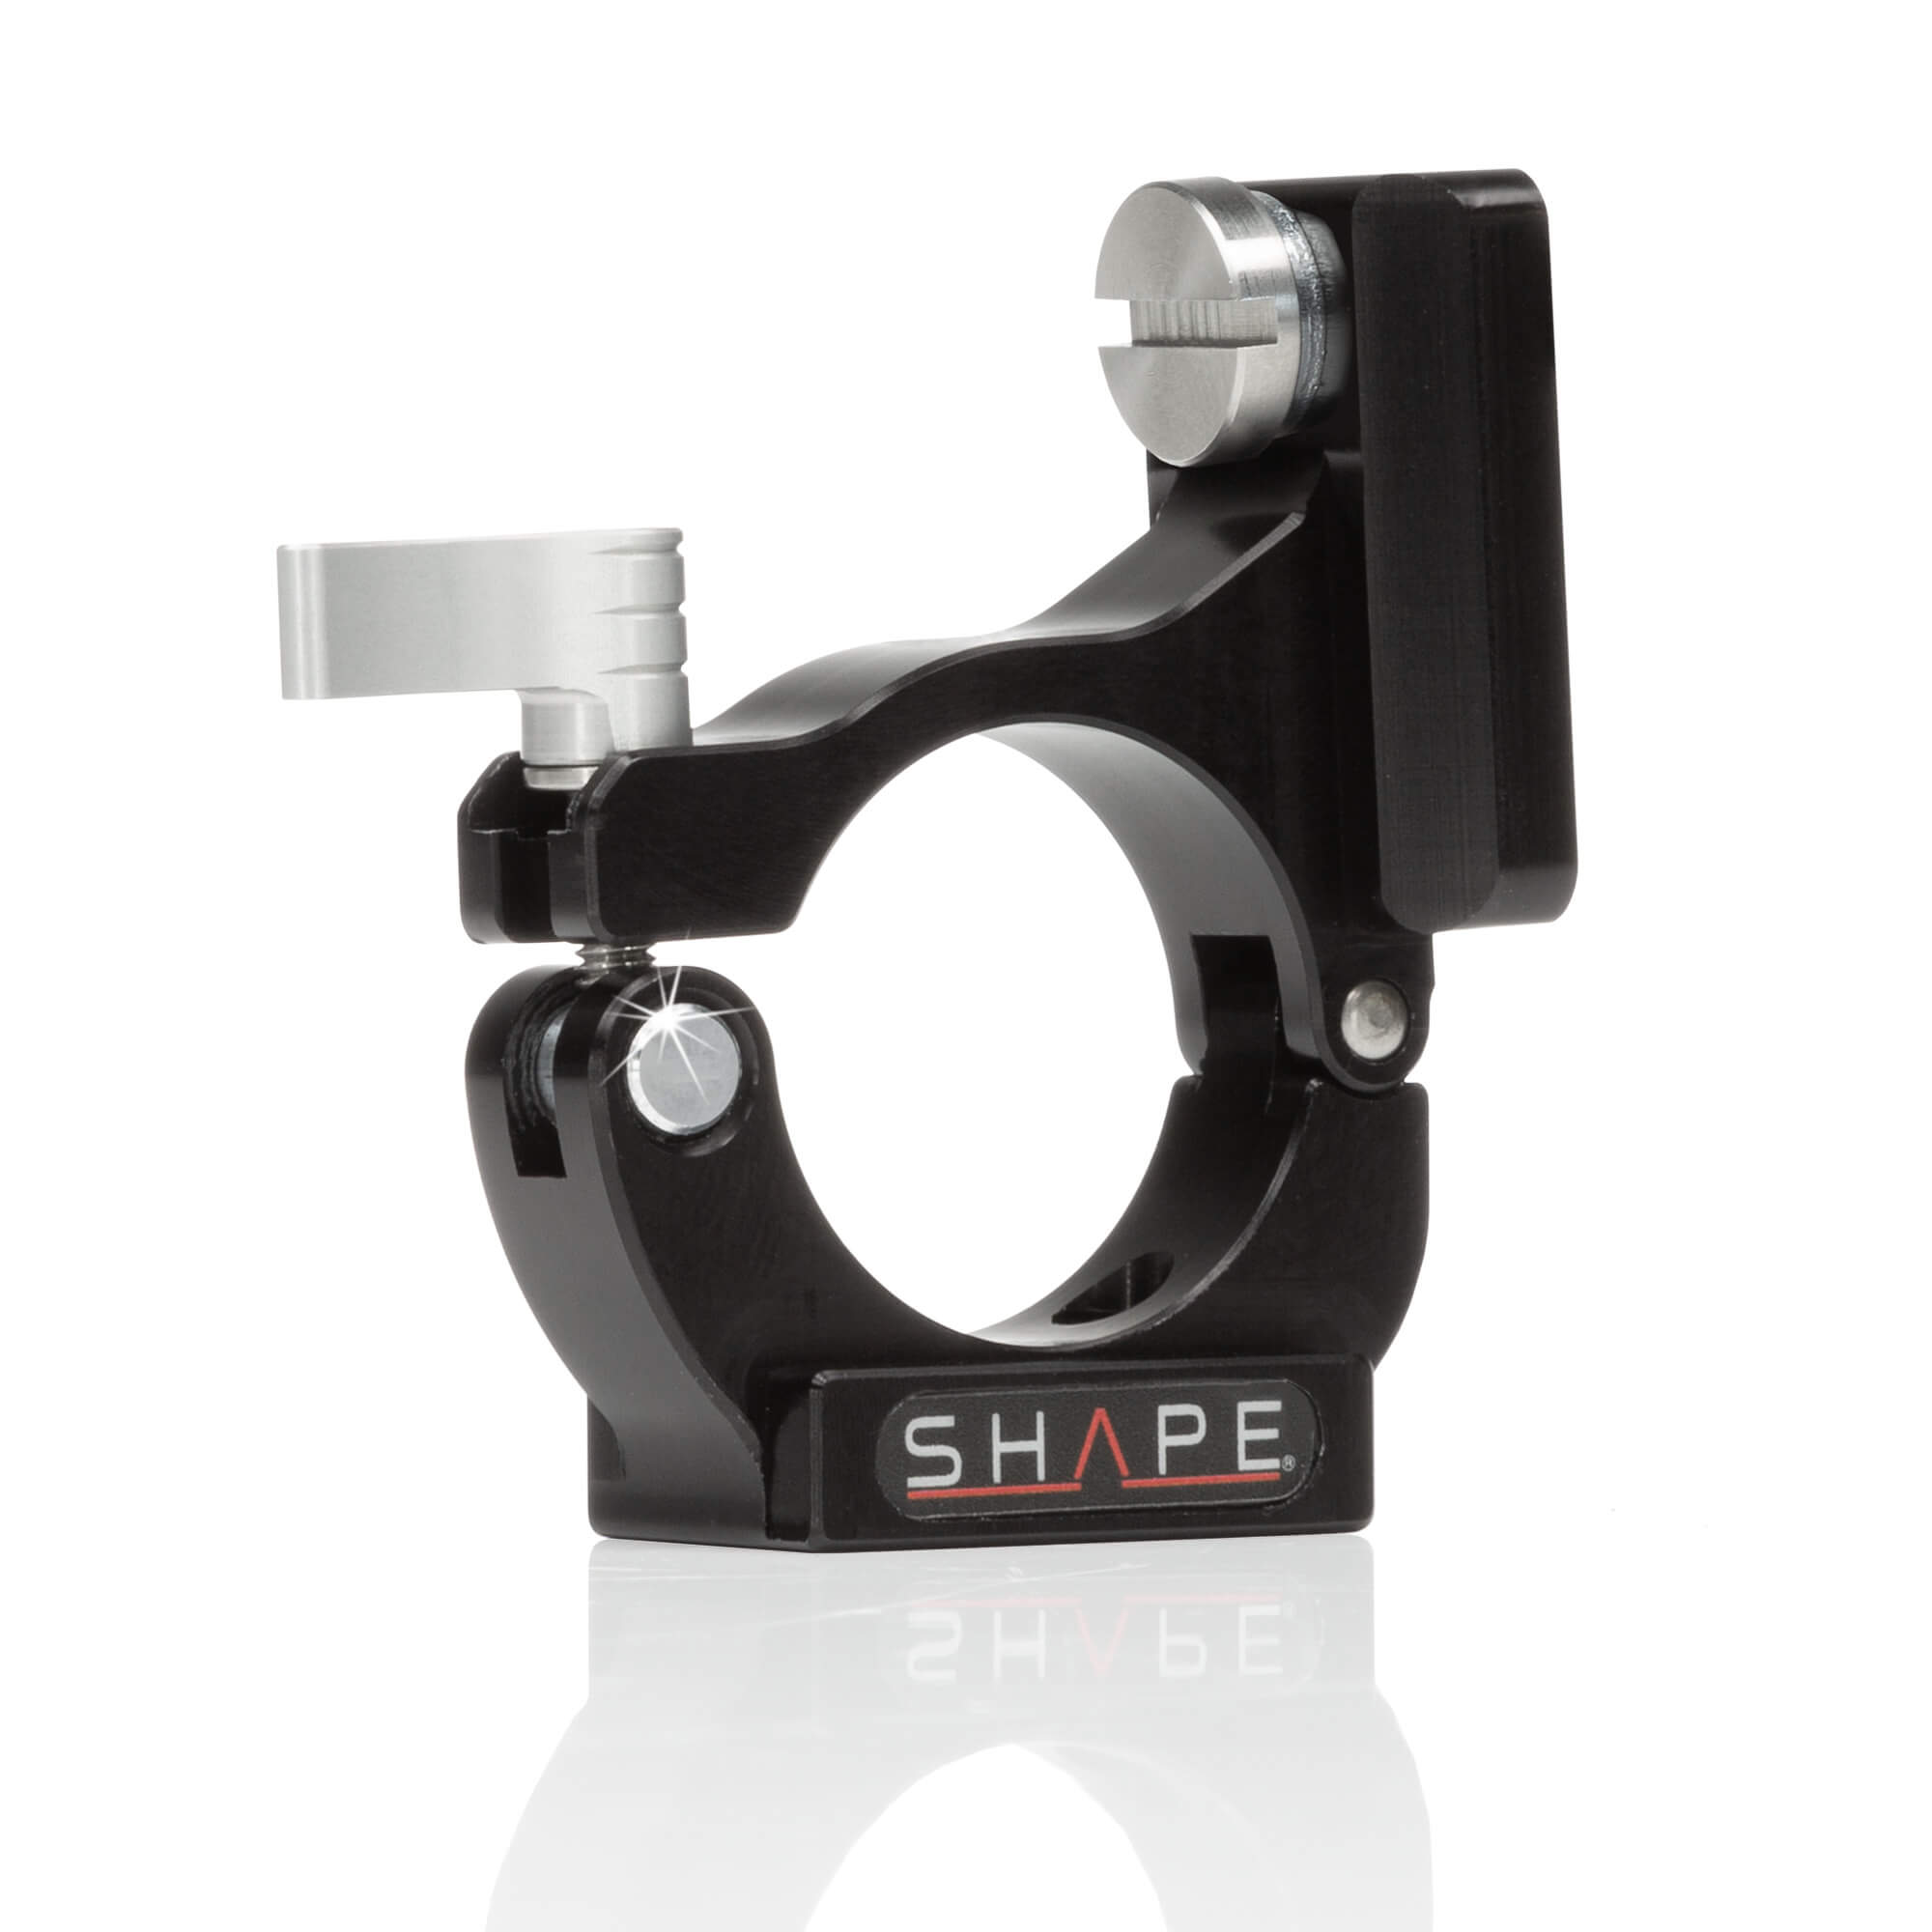 SHAPE monitor magic arm for 22 mm gimbal rod - SHAPE